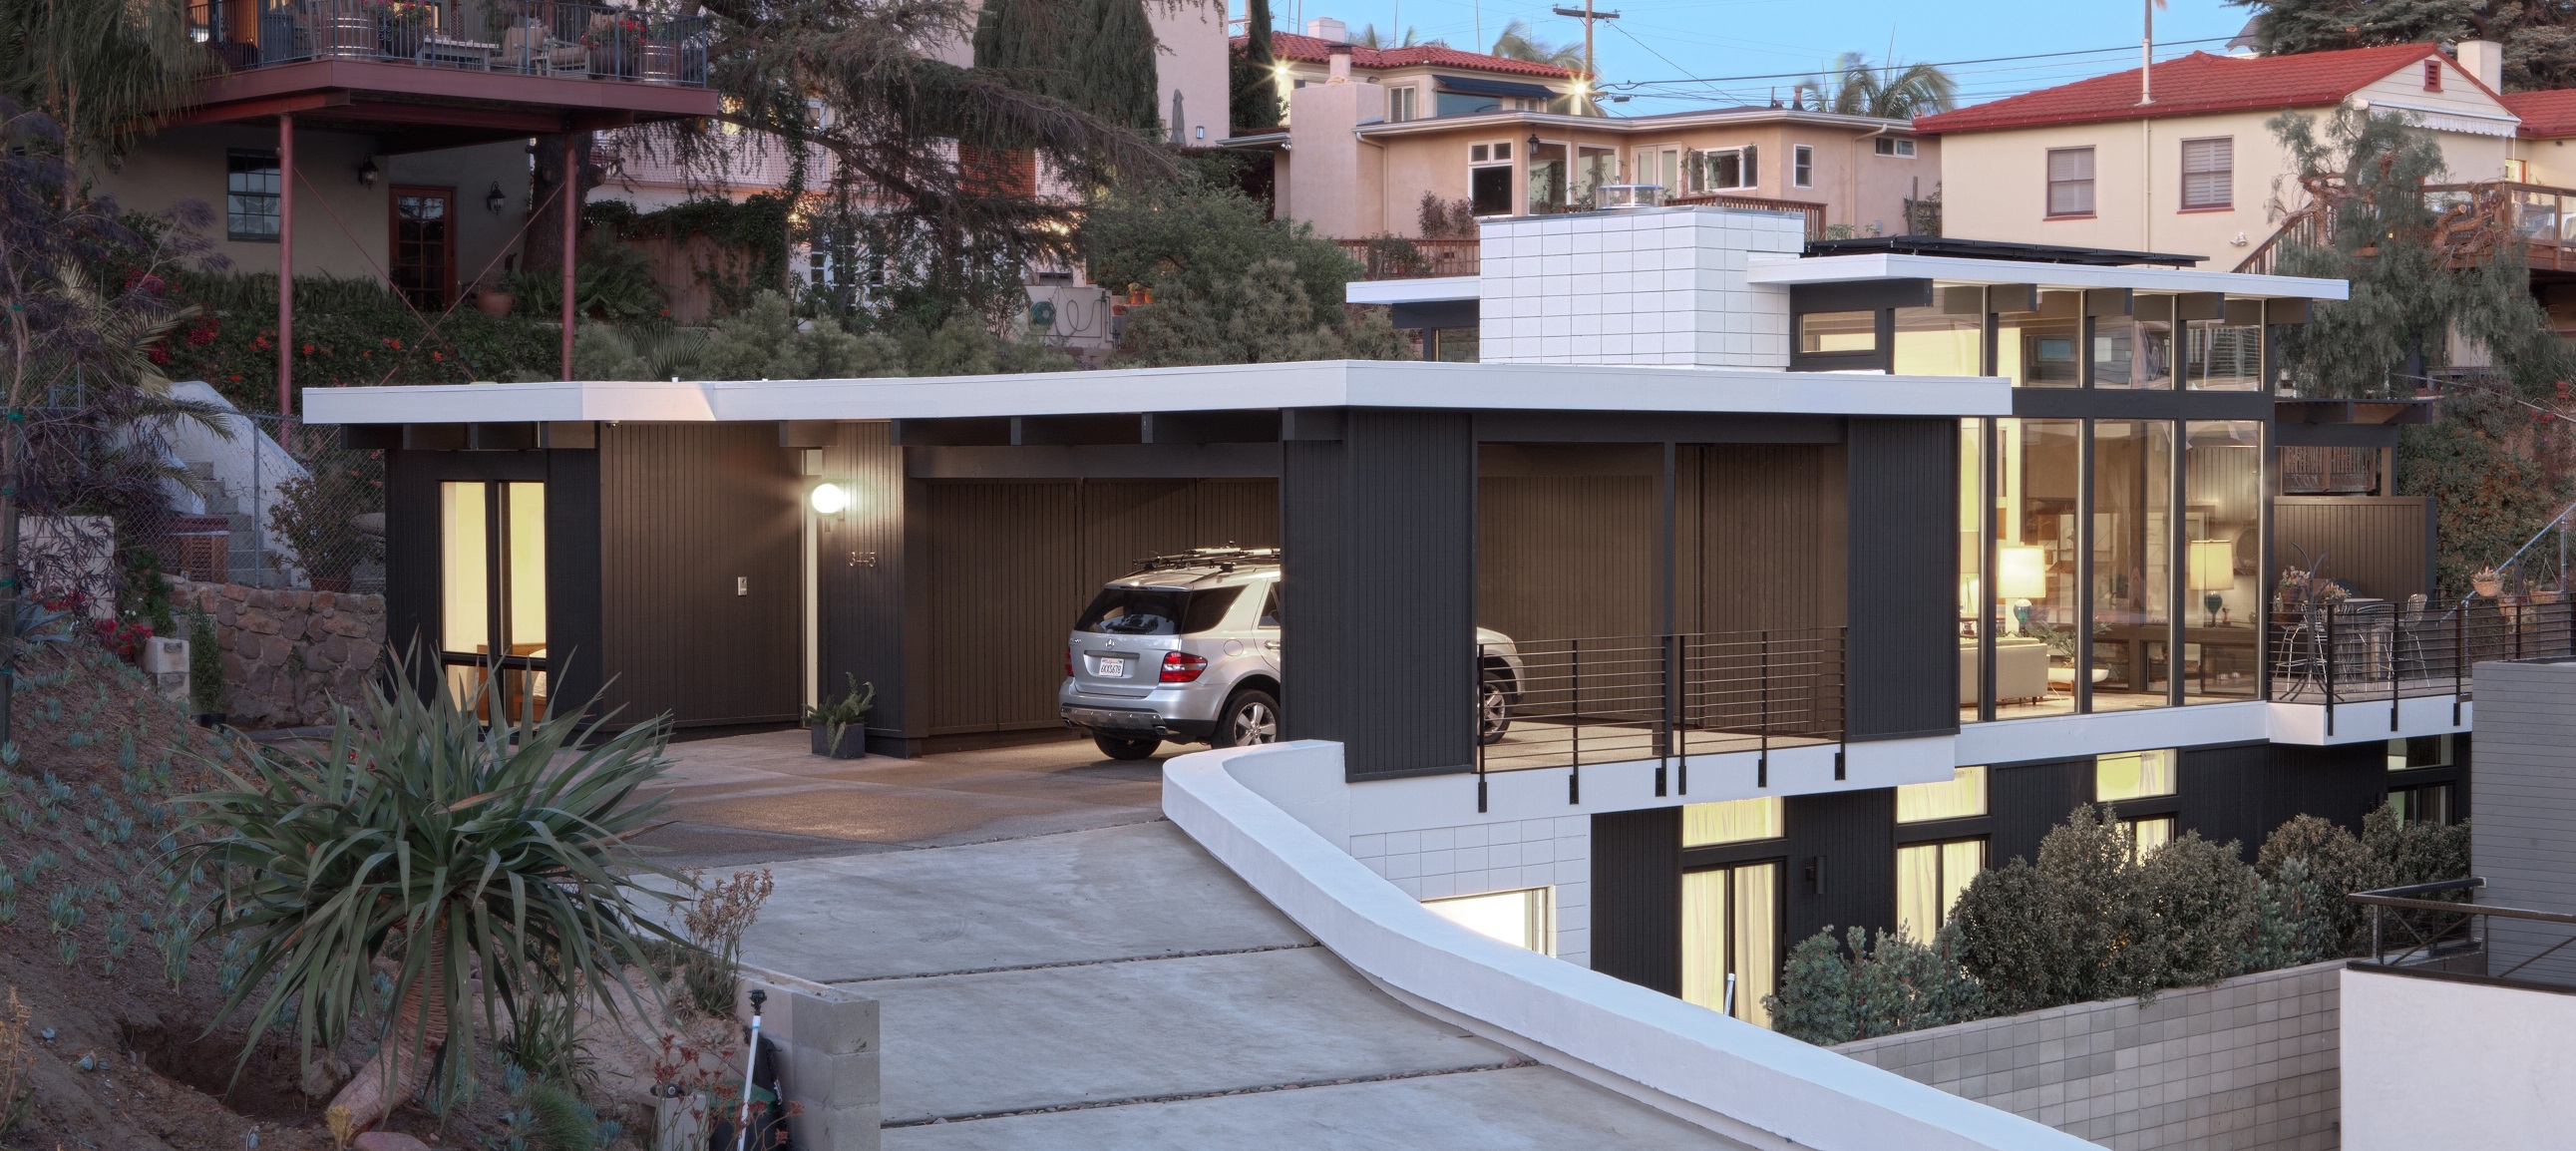 Nakhshab Development & Design home 3 in San Diego